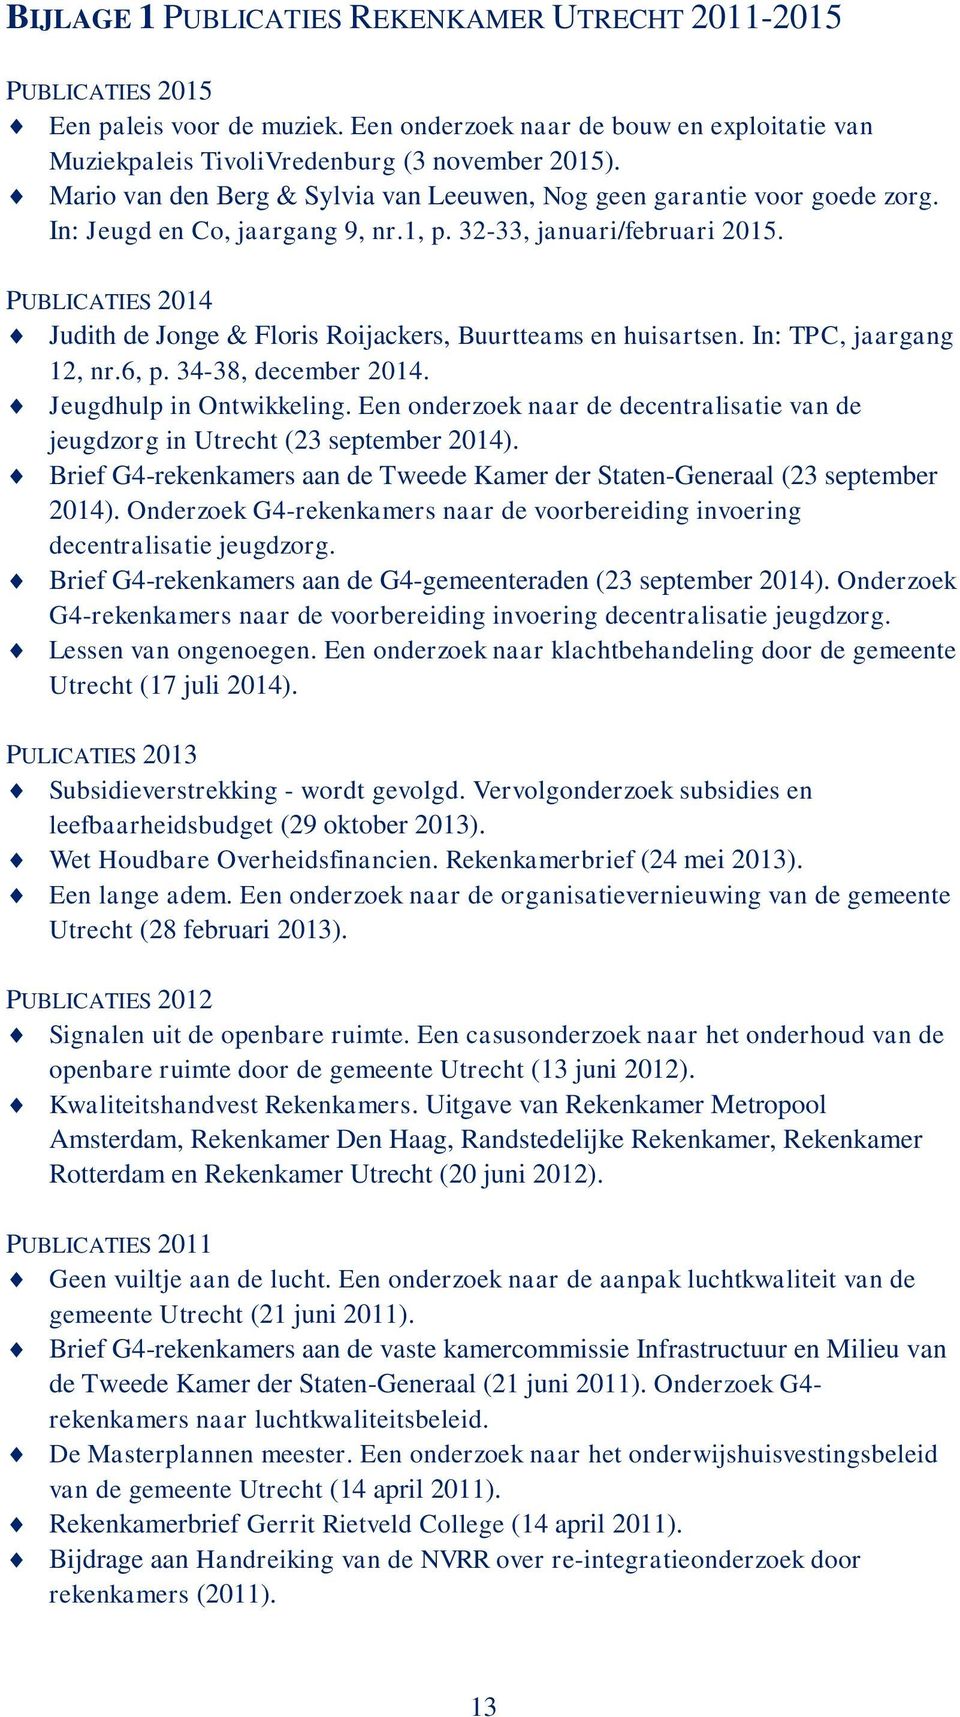 PUBLICATIES 2014 Judith de Jonge & Floris Roijackers, Buurtteams en huisartsen. In: TPC, jaargang 12, nr.6, p. 34-38, december 2014. Jeugdhulp in Ontwikkeling.